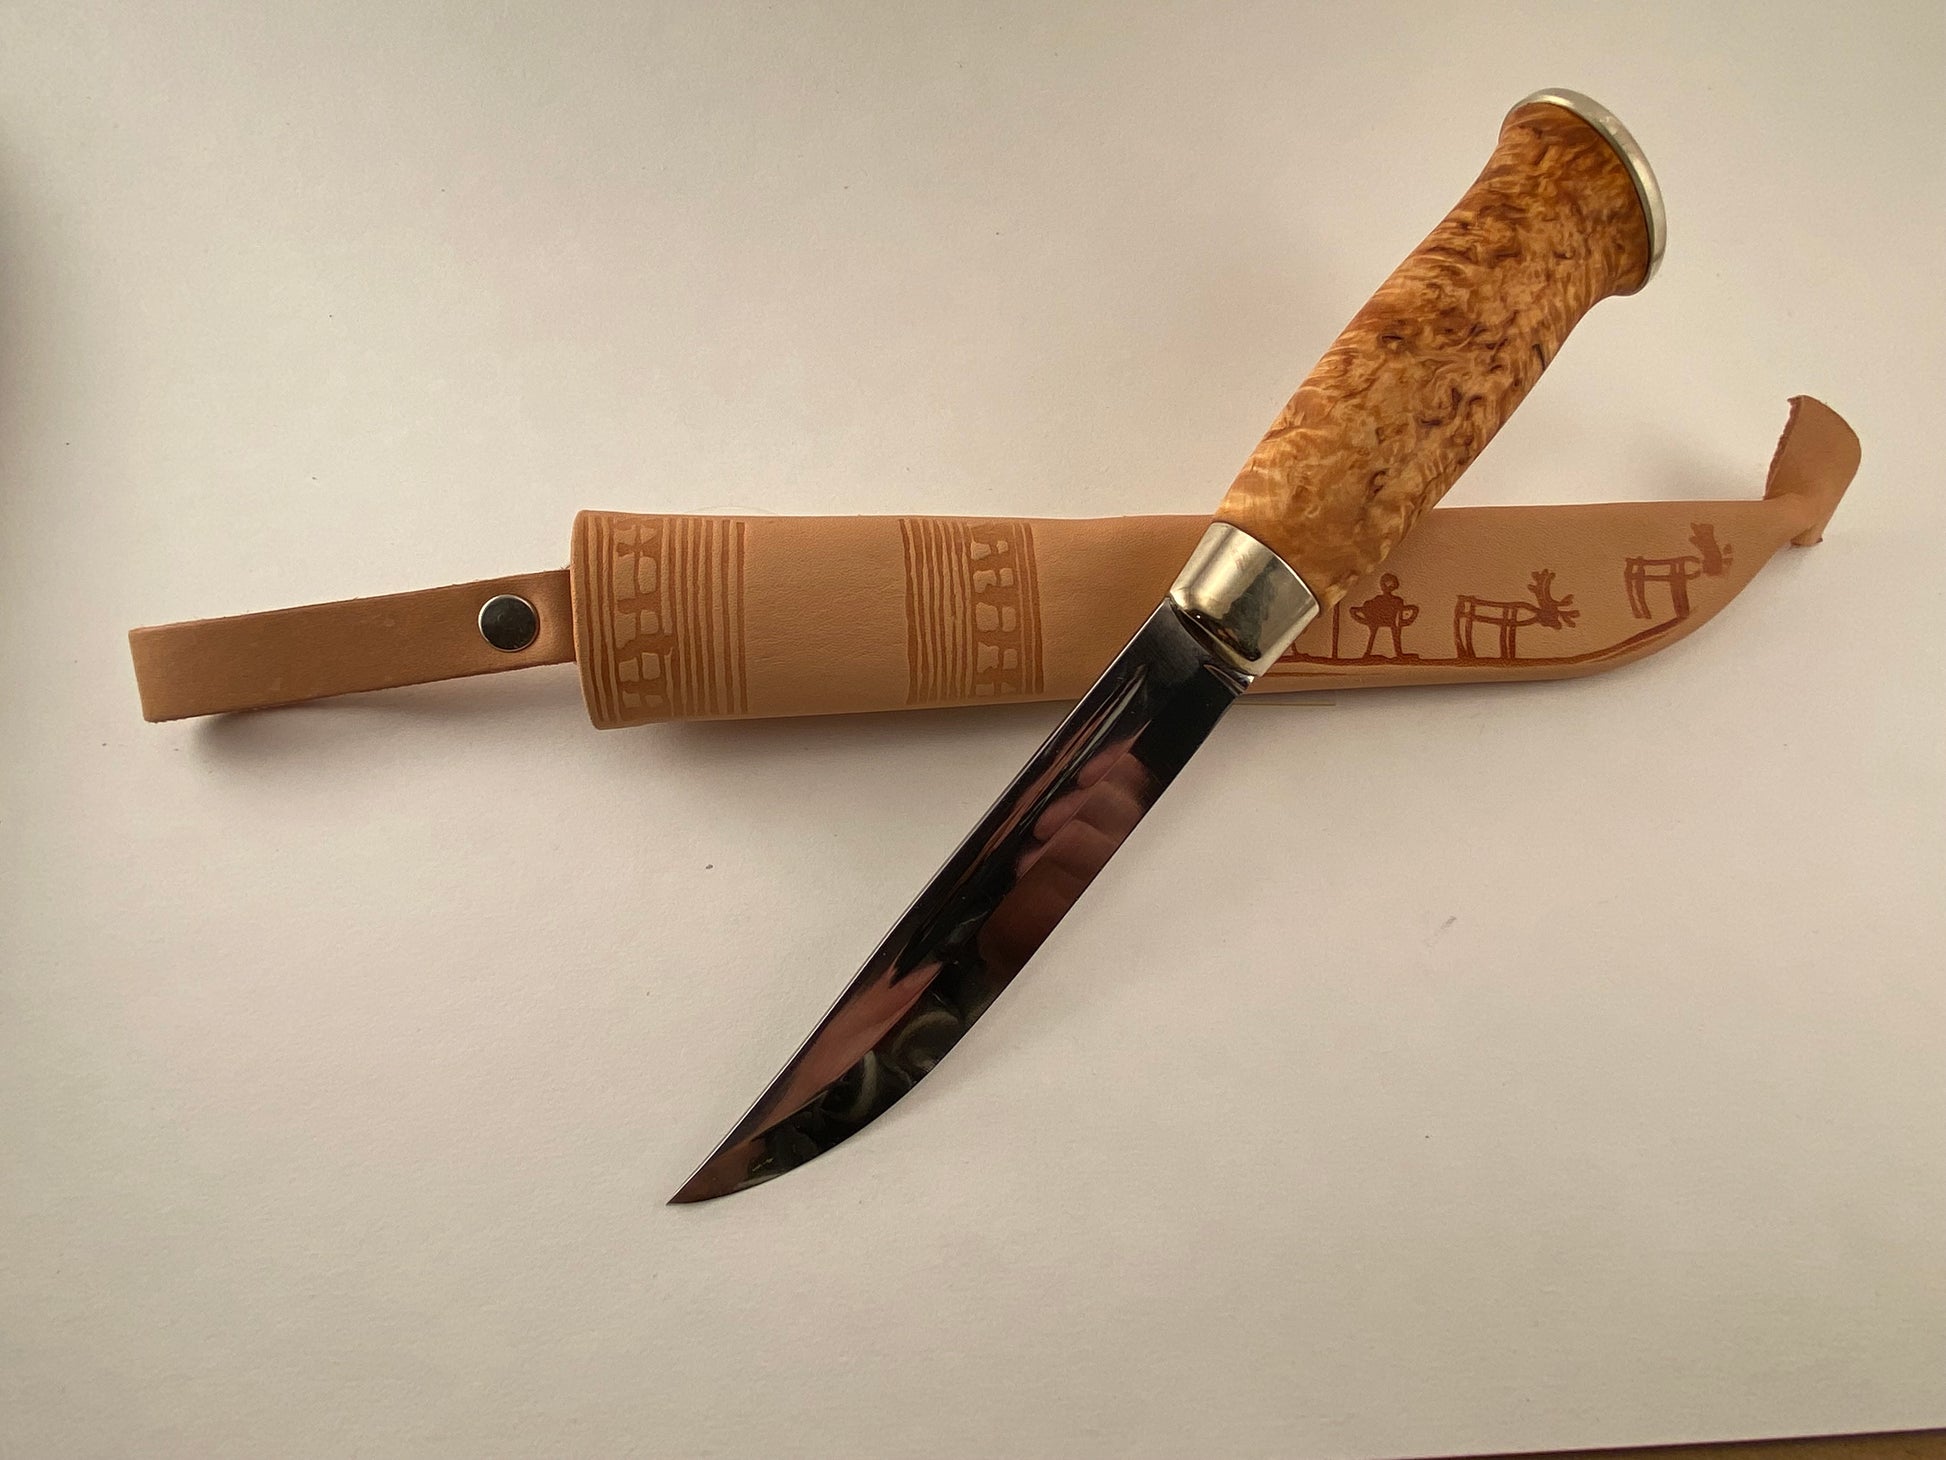 ROG Puukko Knife and Sheath - an all around woods & home knife